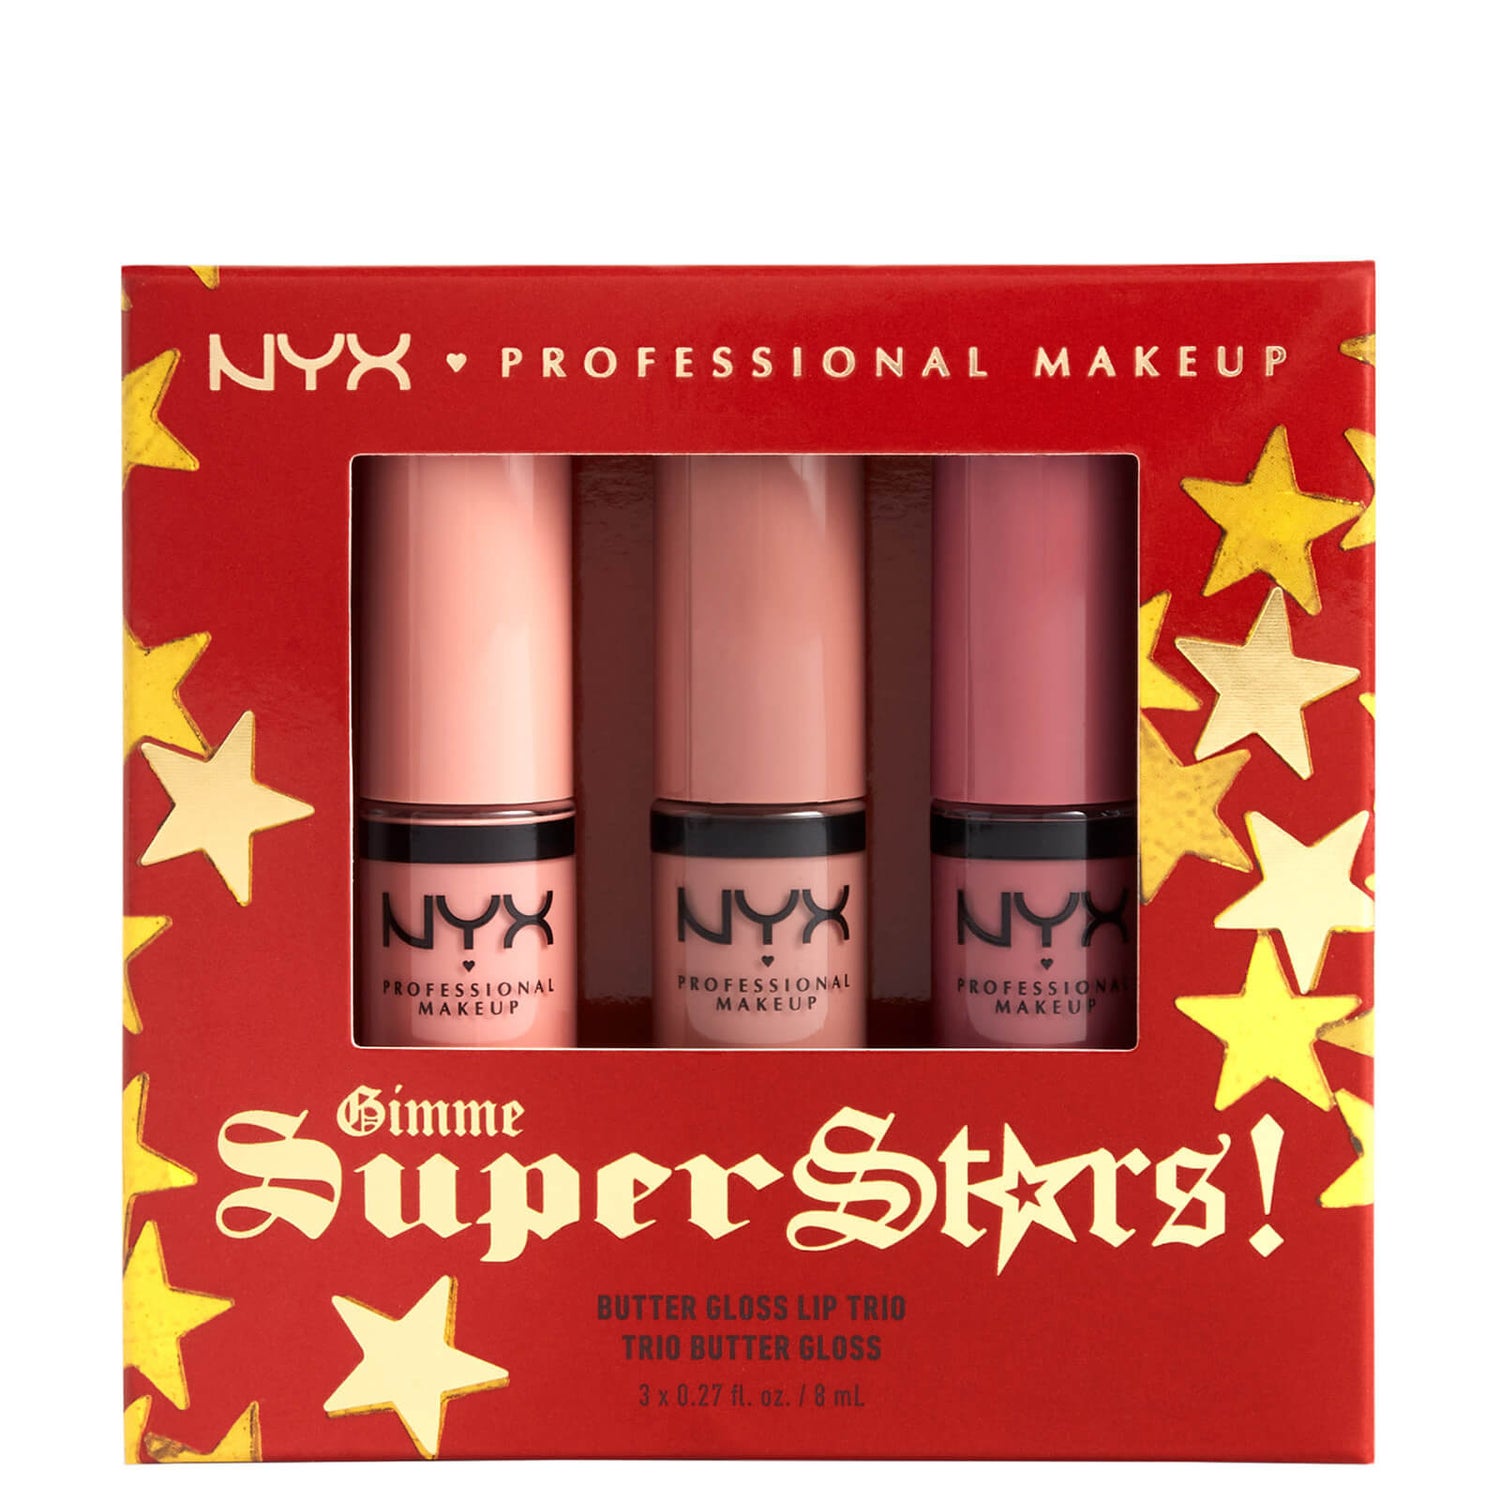 NYX Professional Makeup Gimme Super Stars! Butter Gloss Lip Trio Light Nude gavesæt